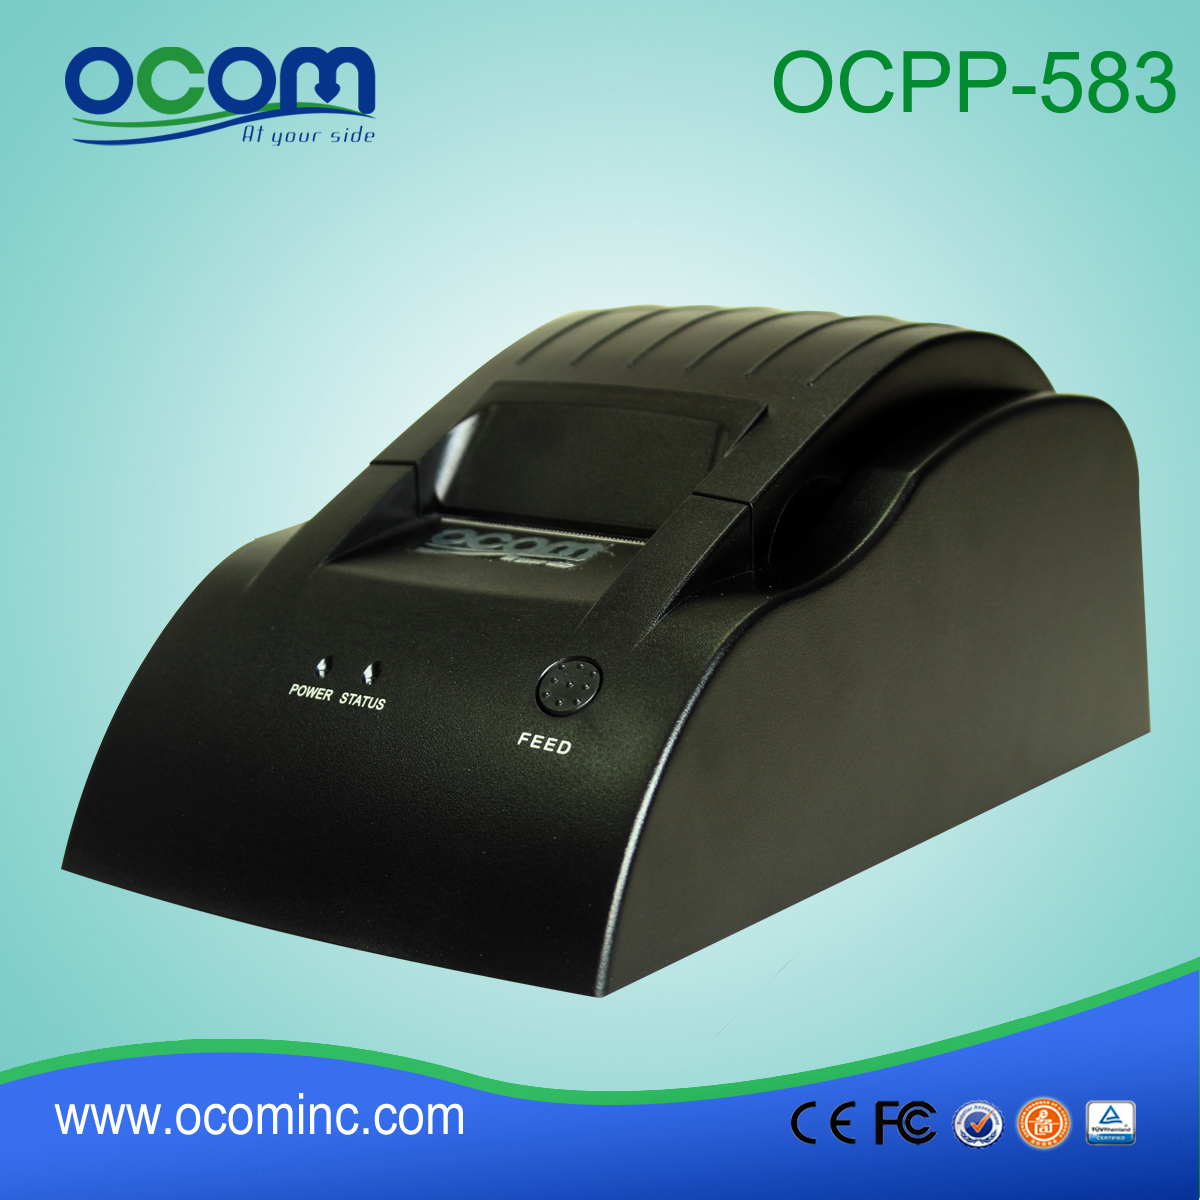 OCPP-583: 2015 directe des prix de l'imprimante thermique, imprimante thermique pos